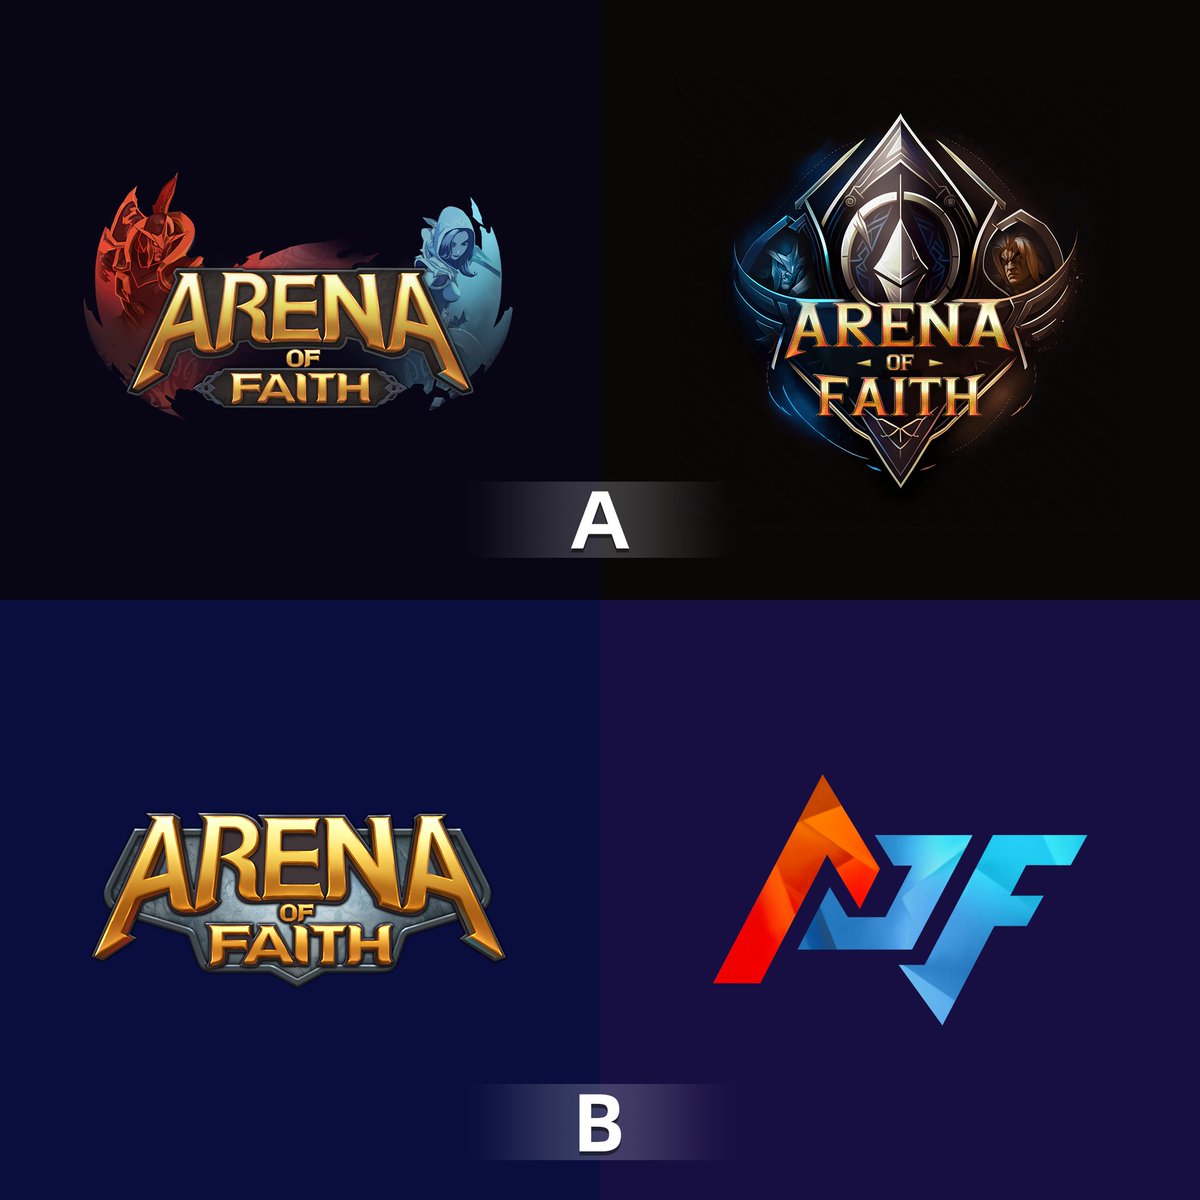 Which logo design do you prefer?  A or B?